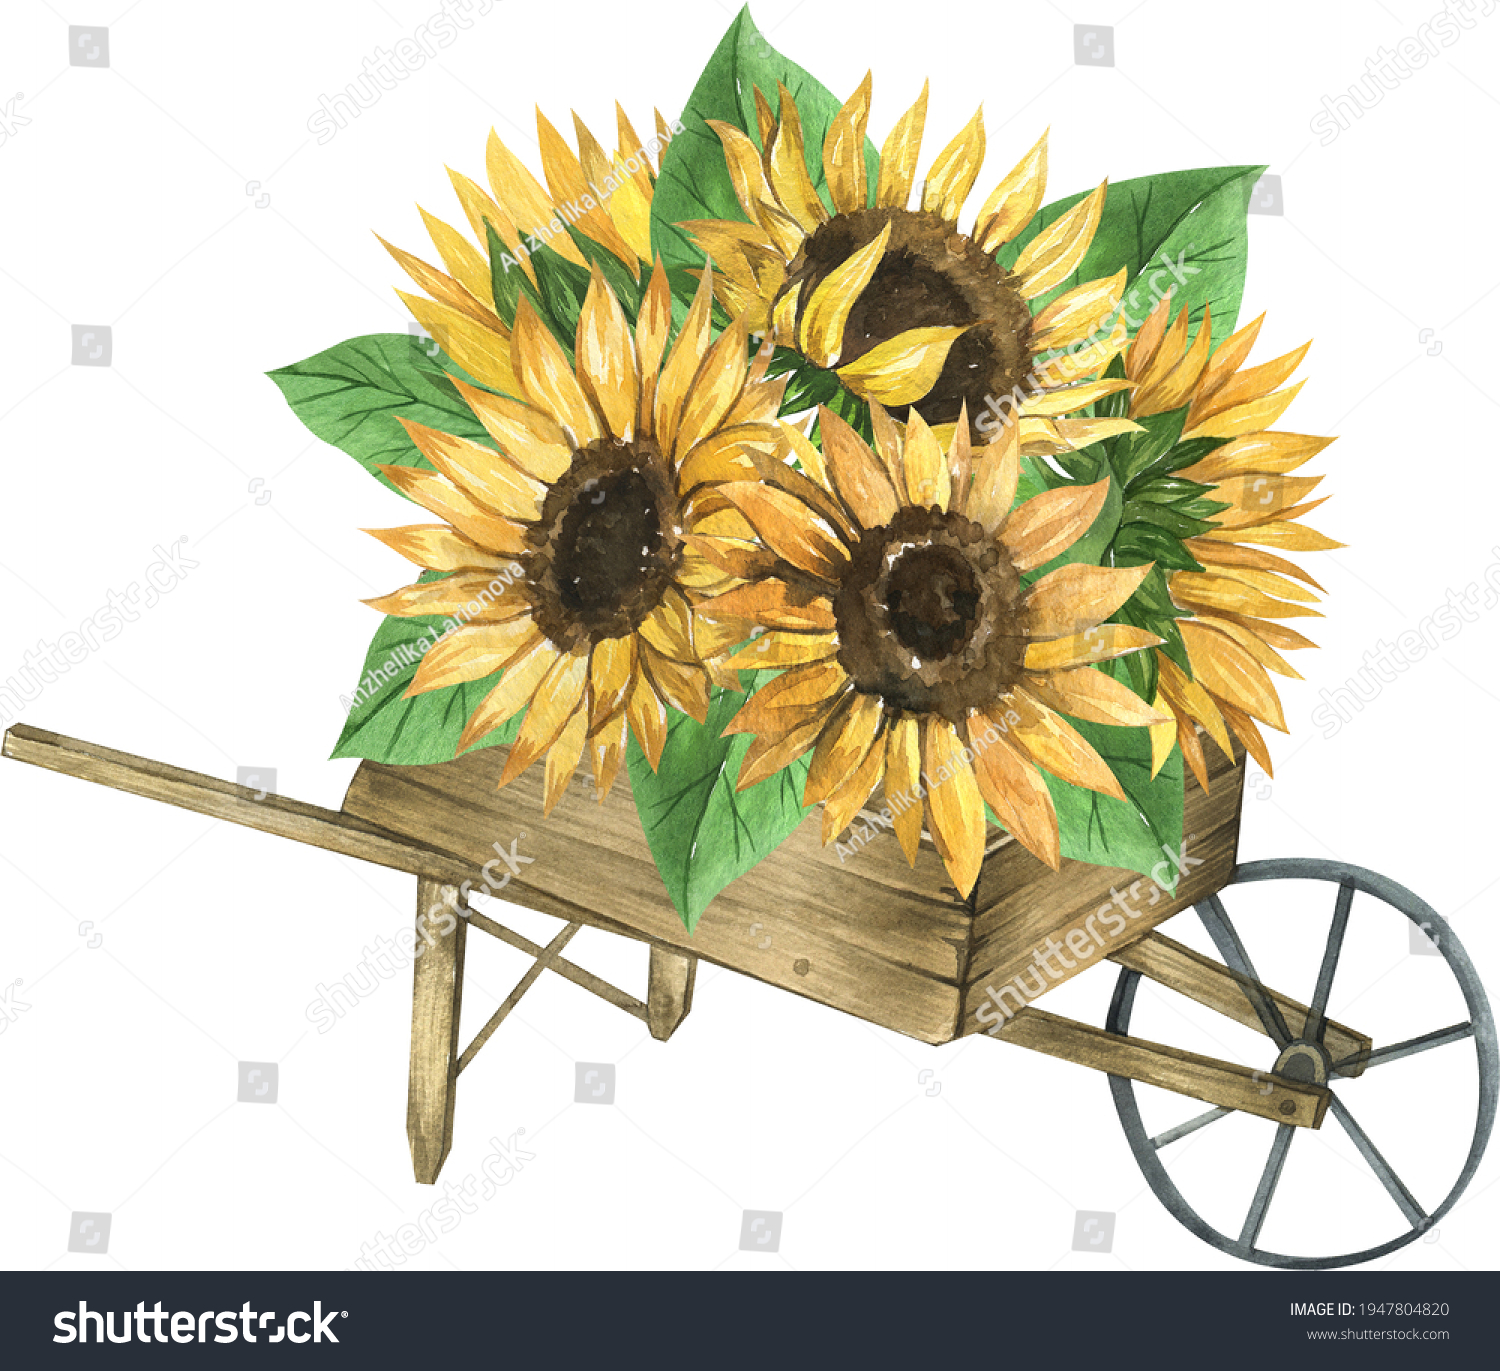 Farmhouse clipart Sunflowers clipart Flowers clipart, Sunflower clipart Rustic clipart Flower clipart